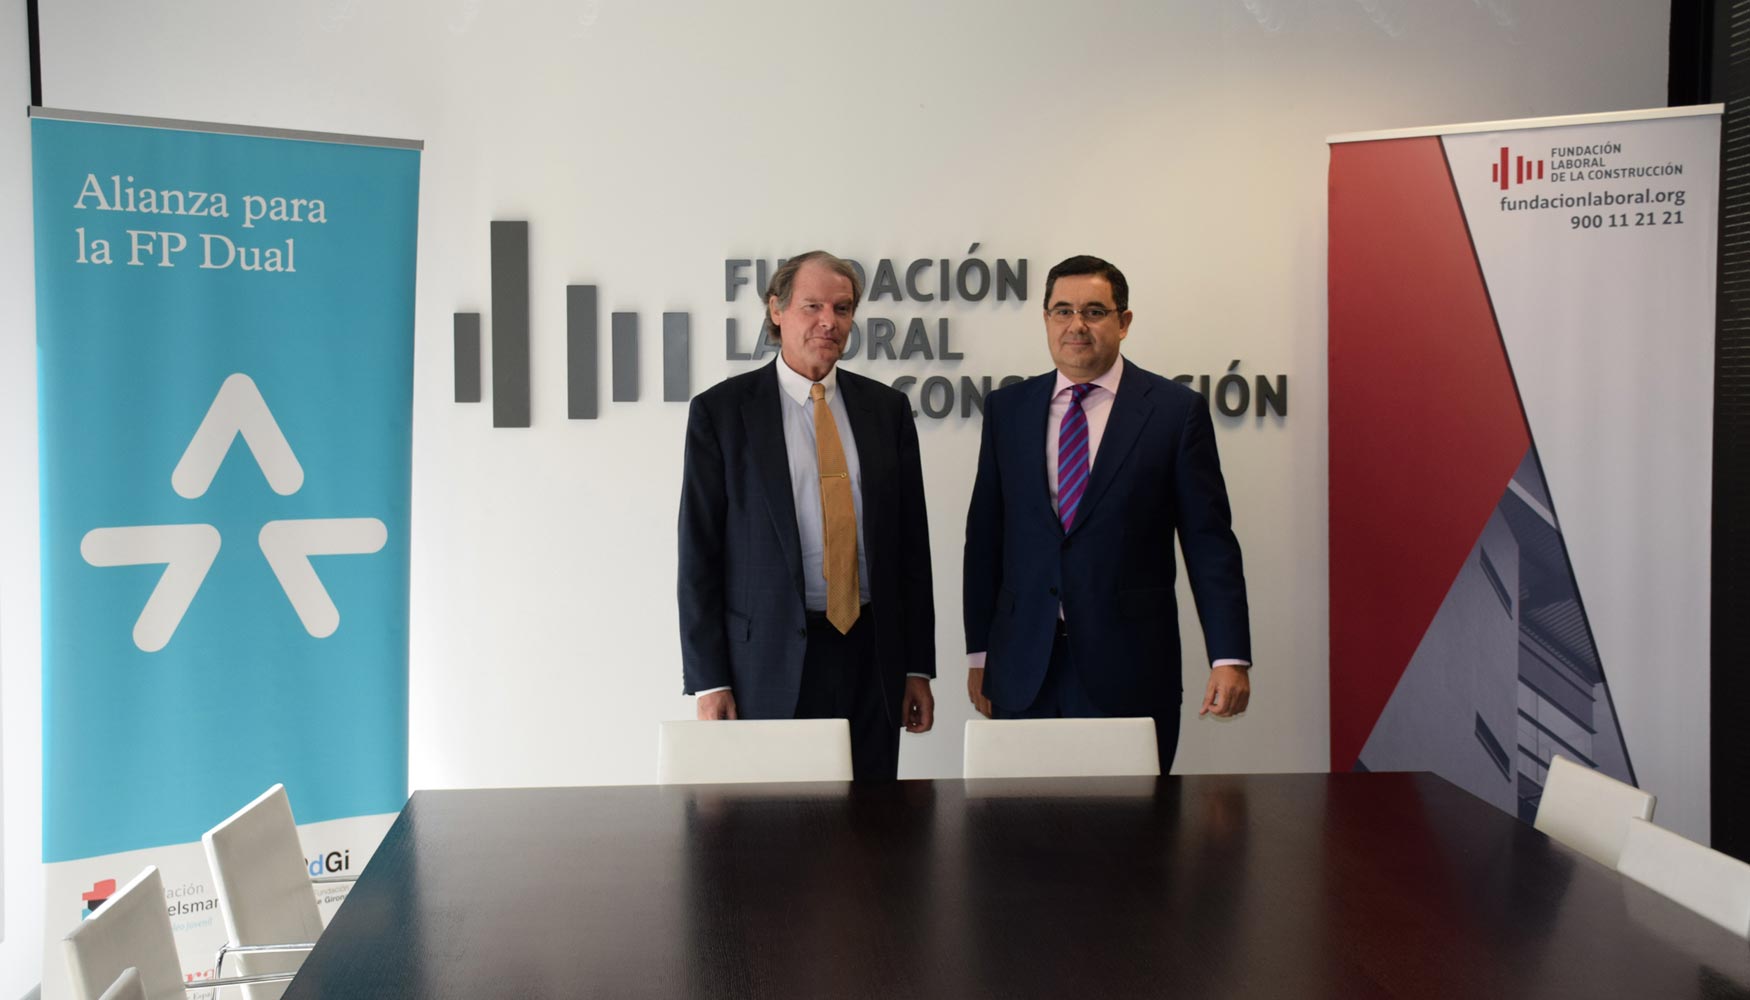 La Fundacin Laboral firma la Alianza para FP Dual de la Fundacion Bertelsmann